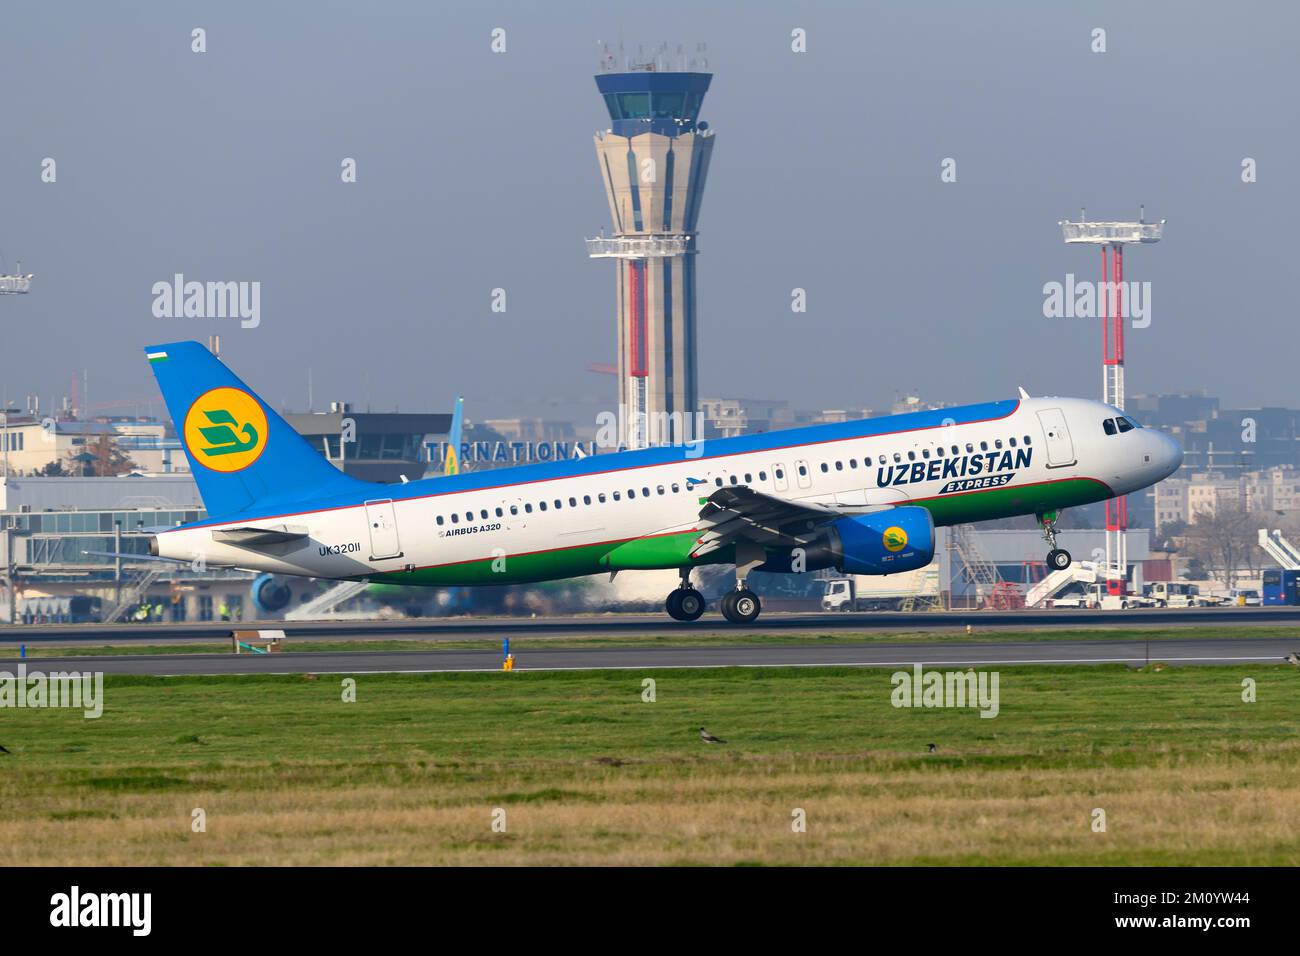 Uzbekistan Airways Express Airbus A320 landing at Tashkent Airport. Aircraft of Uzbekistan Express with Tashkent air traffic control ATC tower behind. Stock Photo